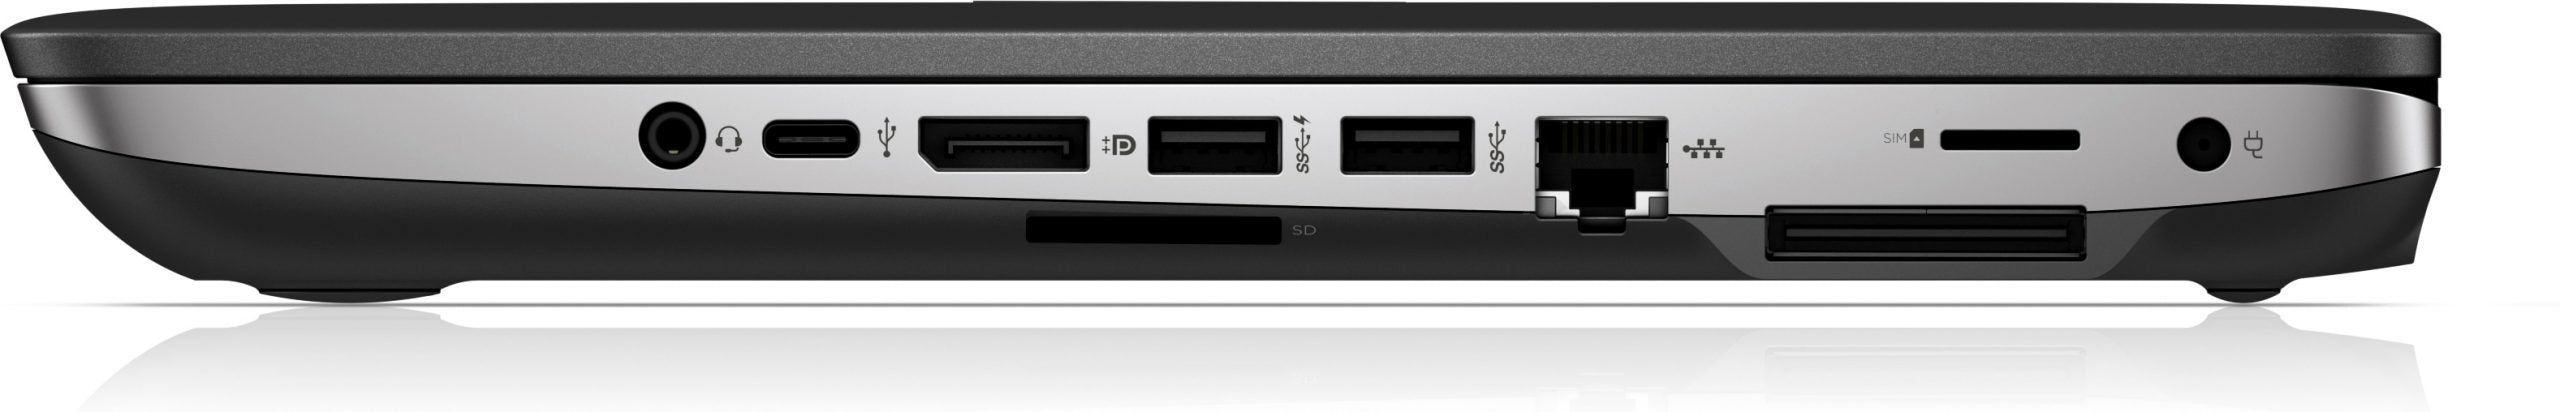 HP ProBook 645 G3 Notebook da 14″ HD | AMD A6-8530B 2.3Ghz | SSD 256Gb | Ram 8Gb | Webcam Tastiera ITA | Docking Station HP D9Y32AA e Borsa Porta PC in Omaggio |Windows 10 Pro